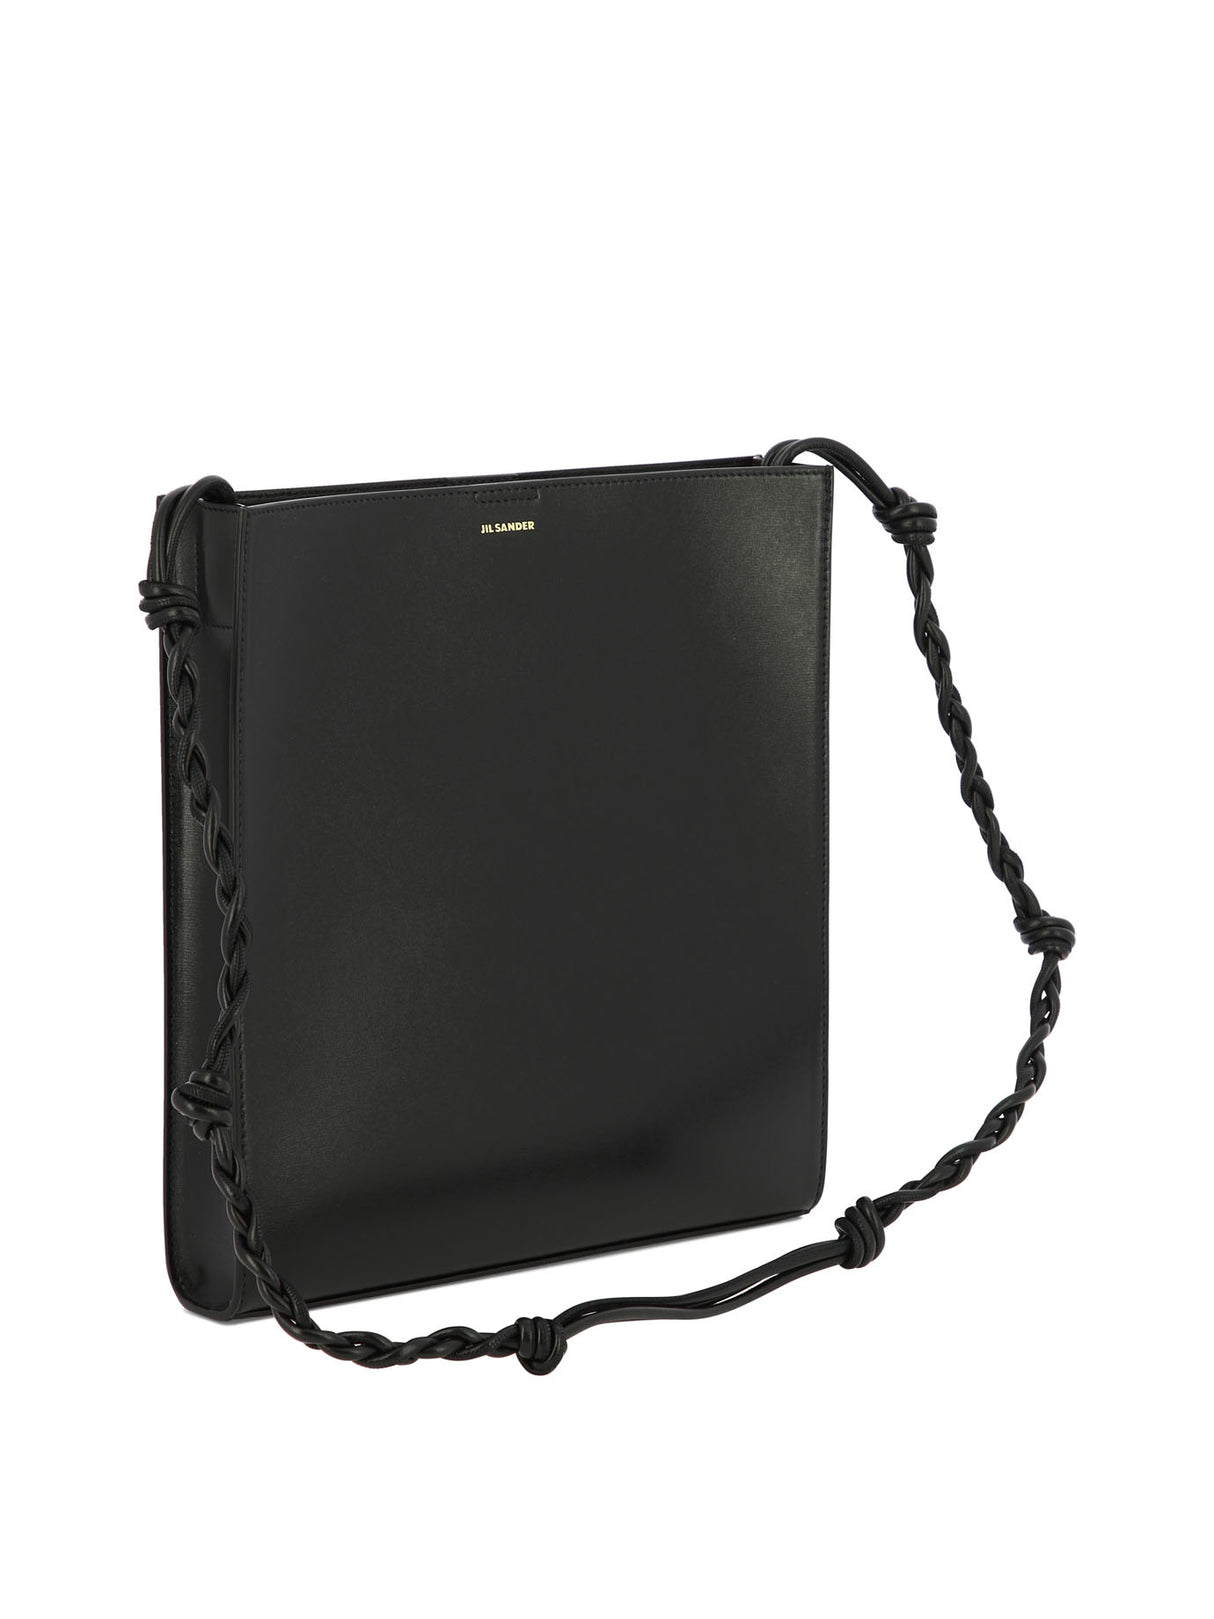 JIL SANDER Classic Black Leather Crossbody Bag for Women - Medium Tangle